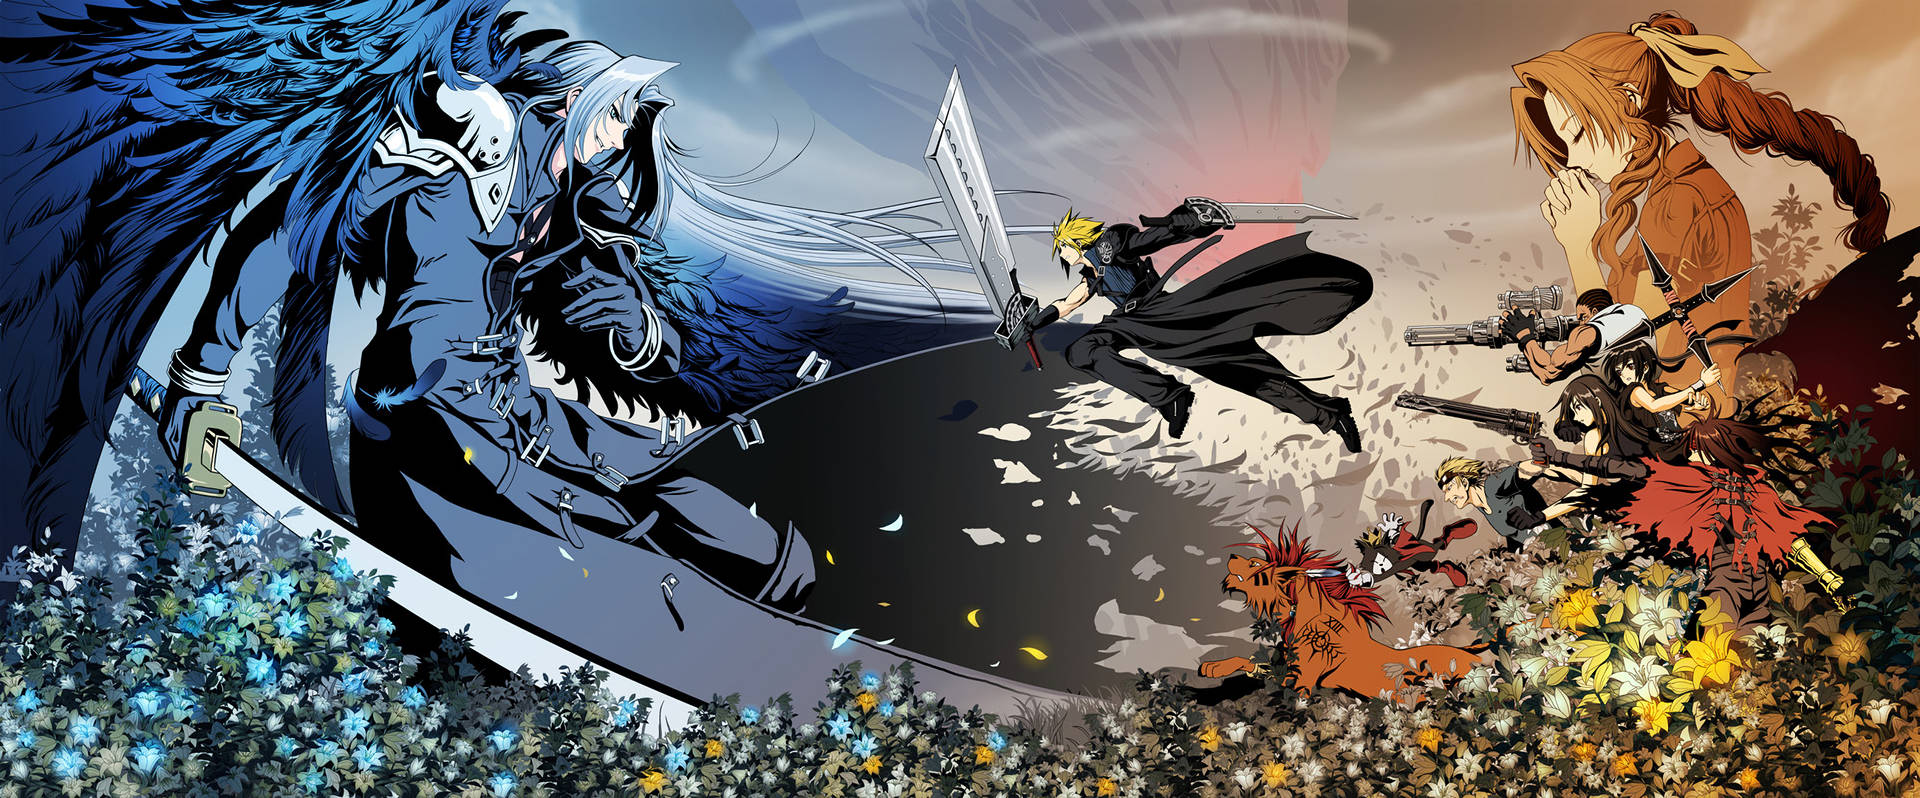 Ff7 Protagonists Versus Sephiroth Background